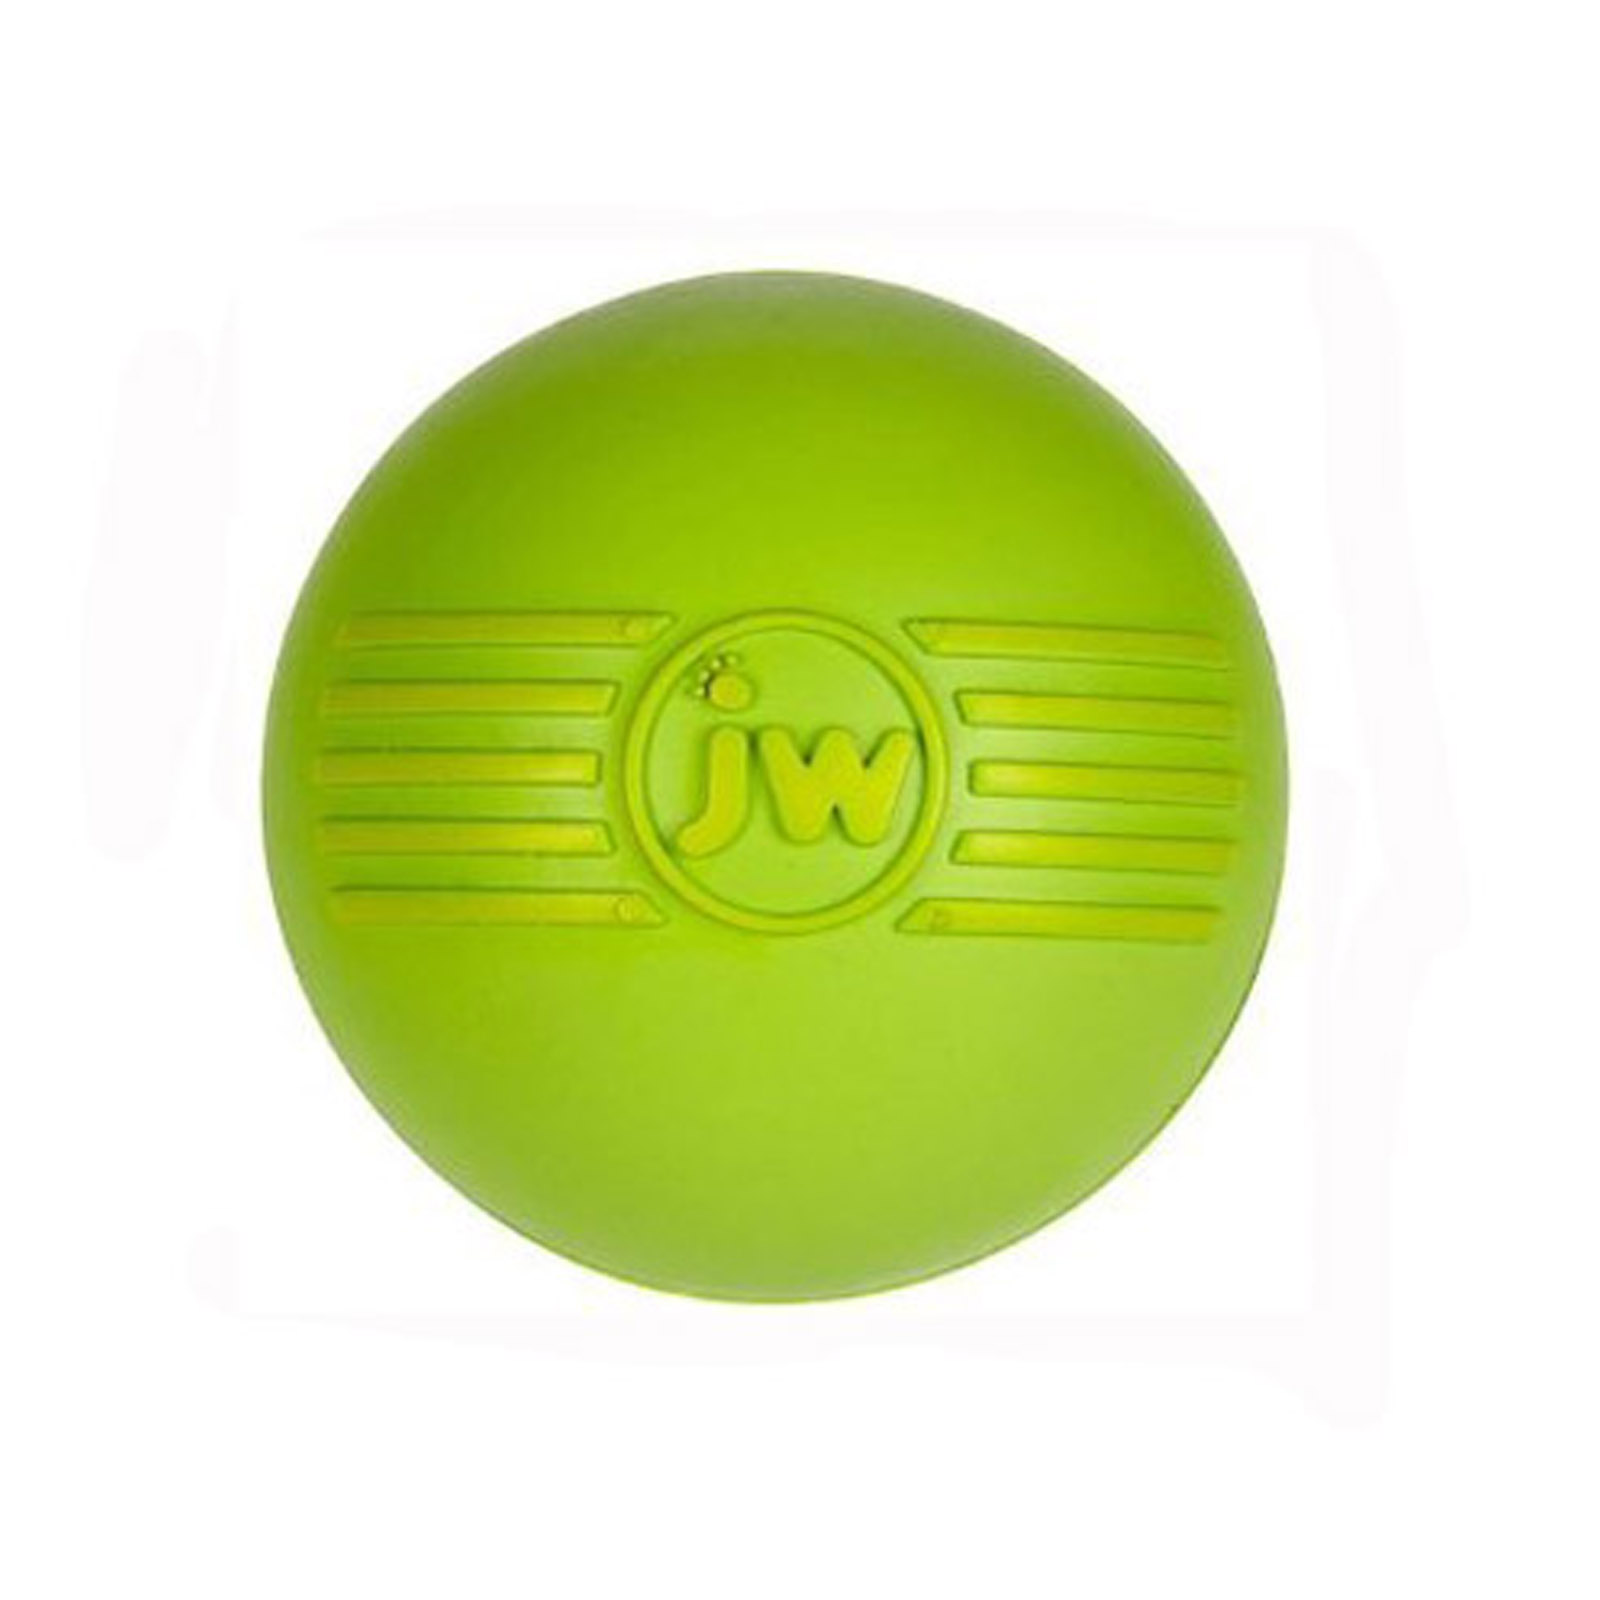 Jw Pet Company Toy Isqueak Ball Small